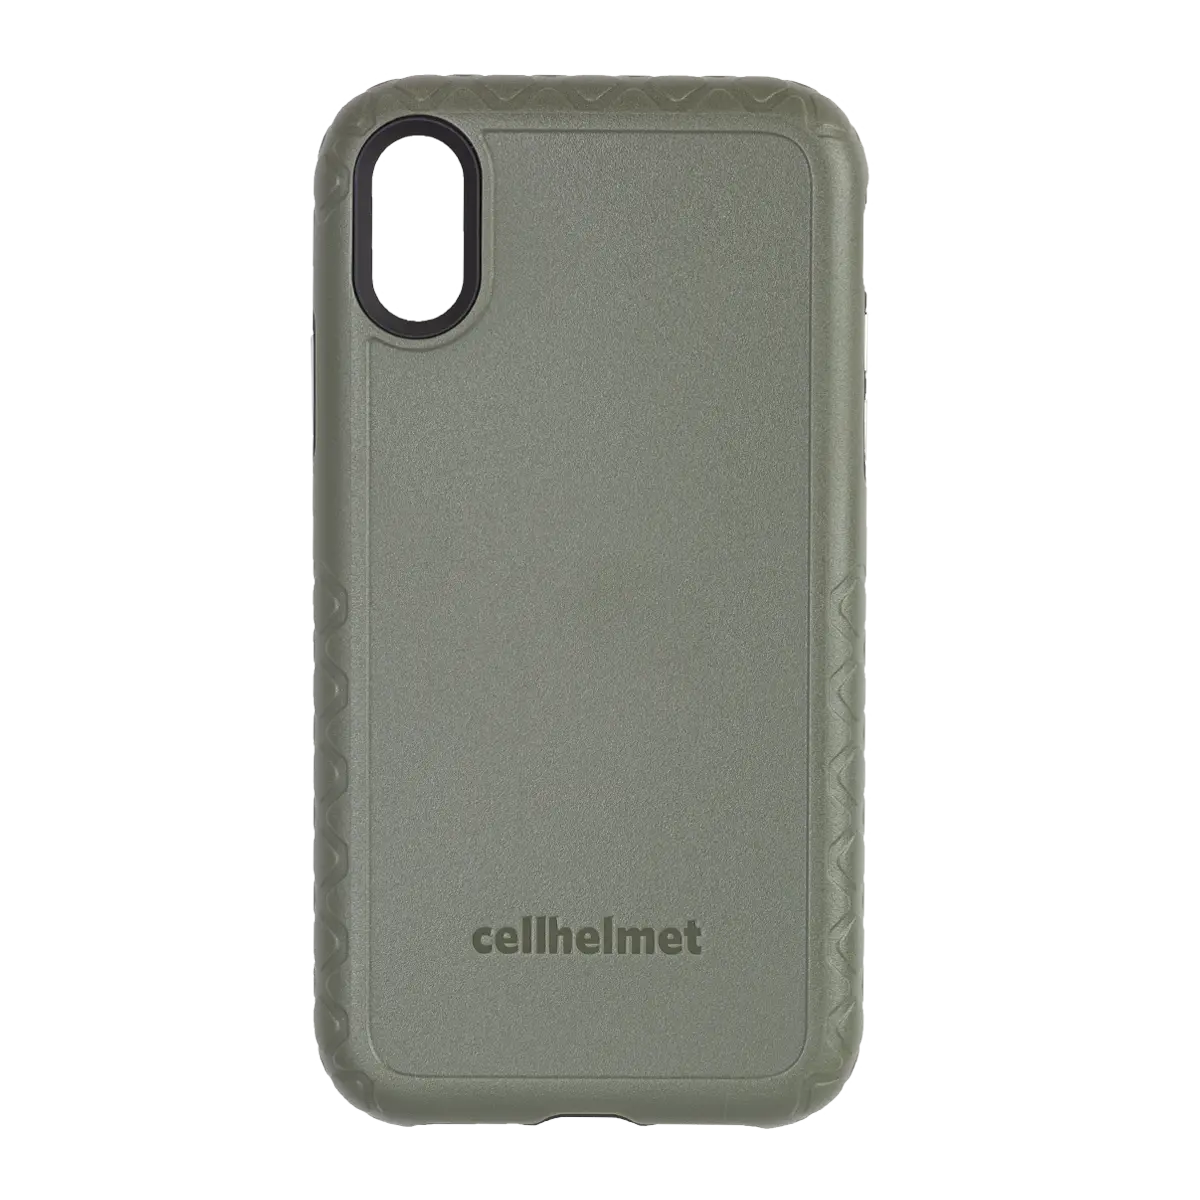 Green cellhelmet Customizable Case for iPhone XS